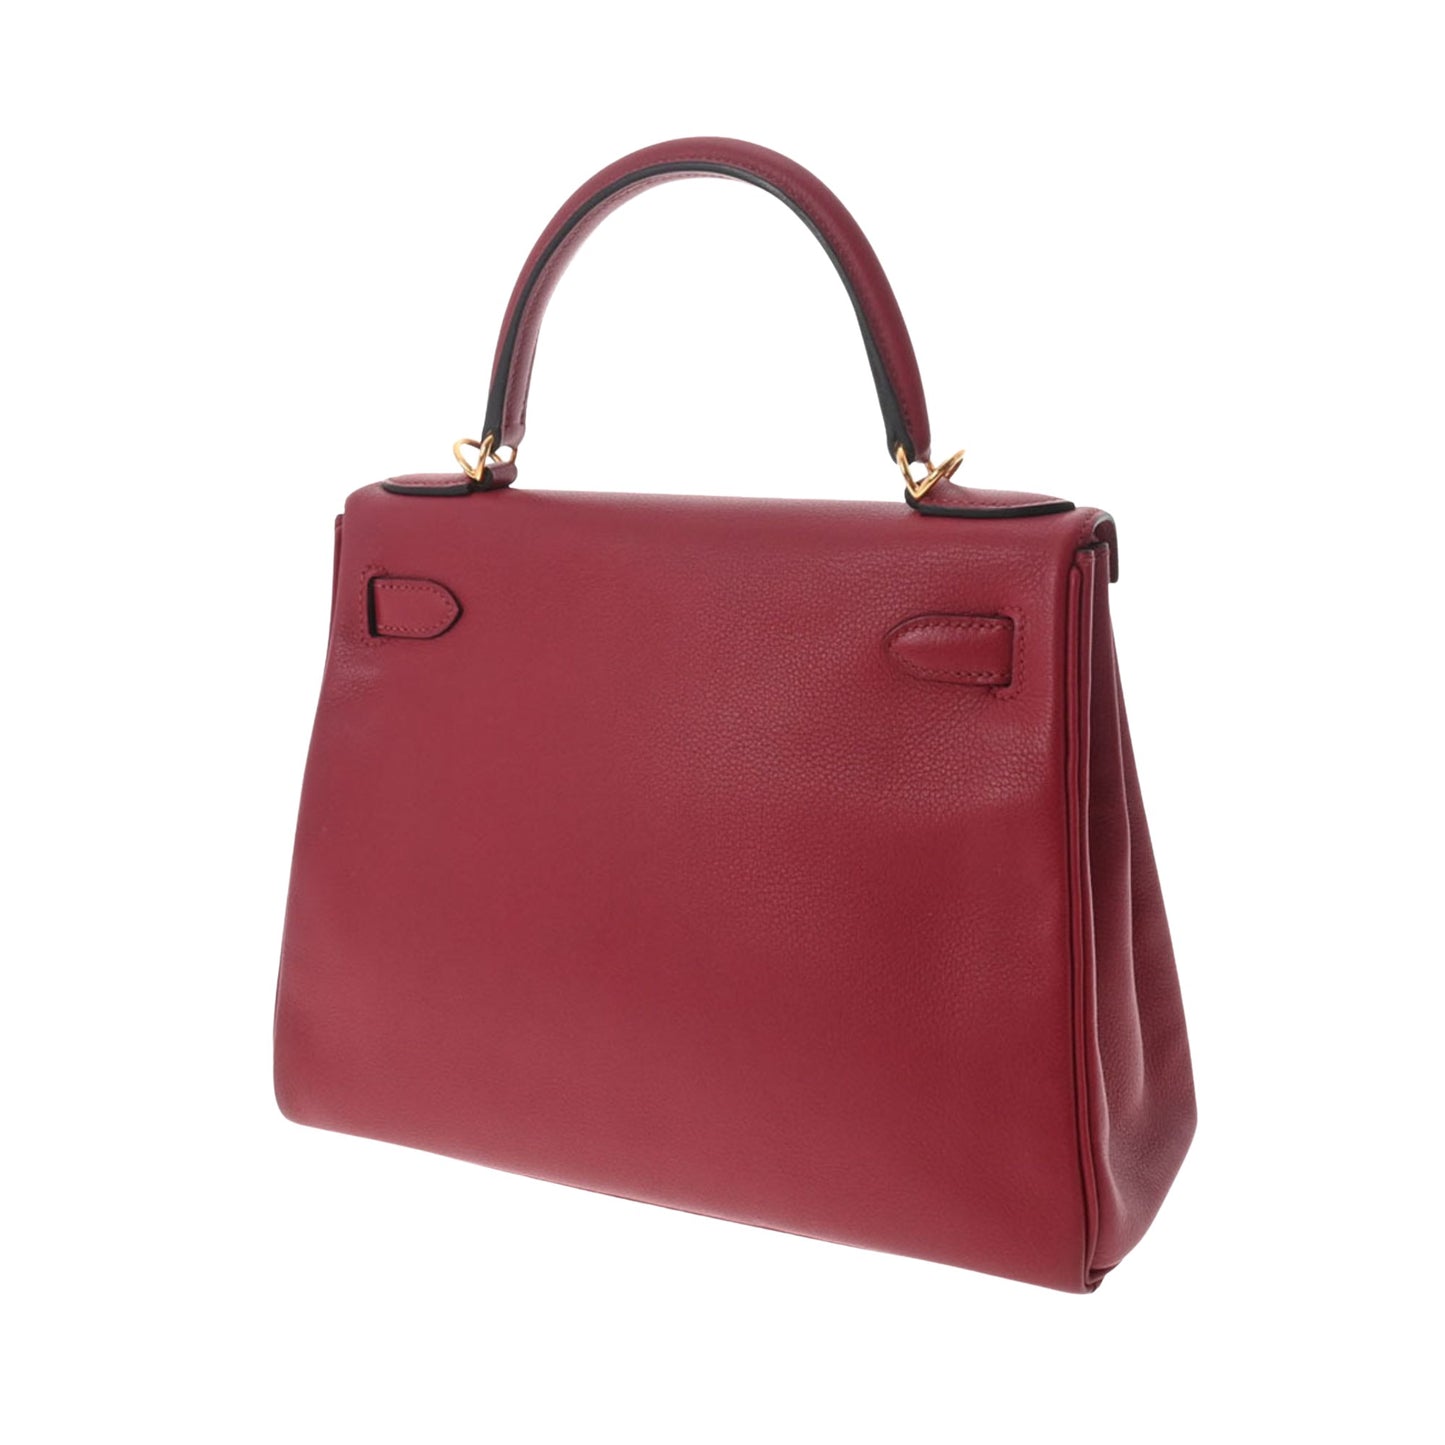 Hermes Women's Luxurious Hermes Kelly 28 Red Leather Handbag in Red